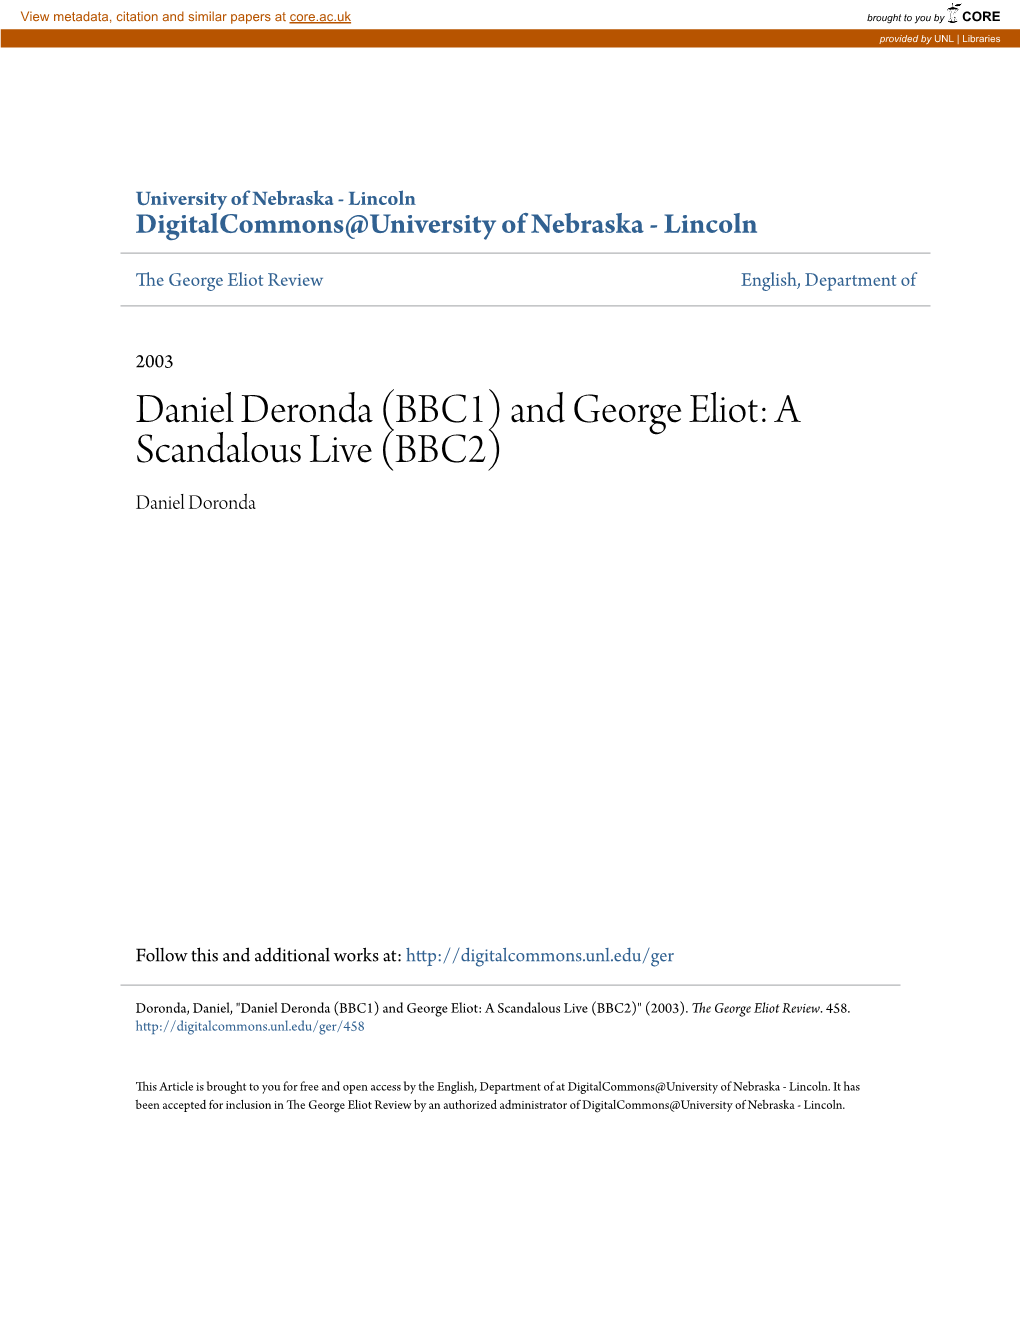 Daniel Deronda (BBC1) and George Eliot: a Scandalous Live (BBC2) Daniel Doronda